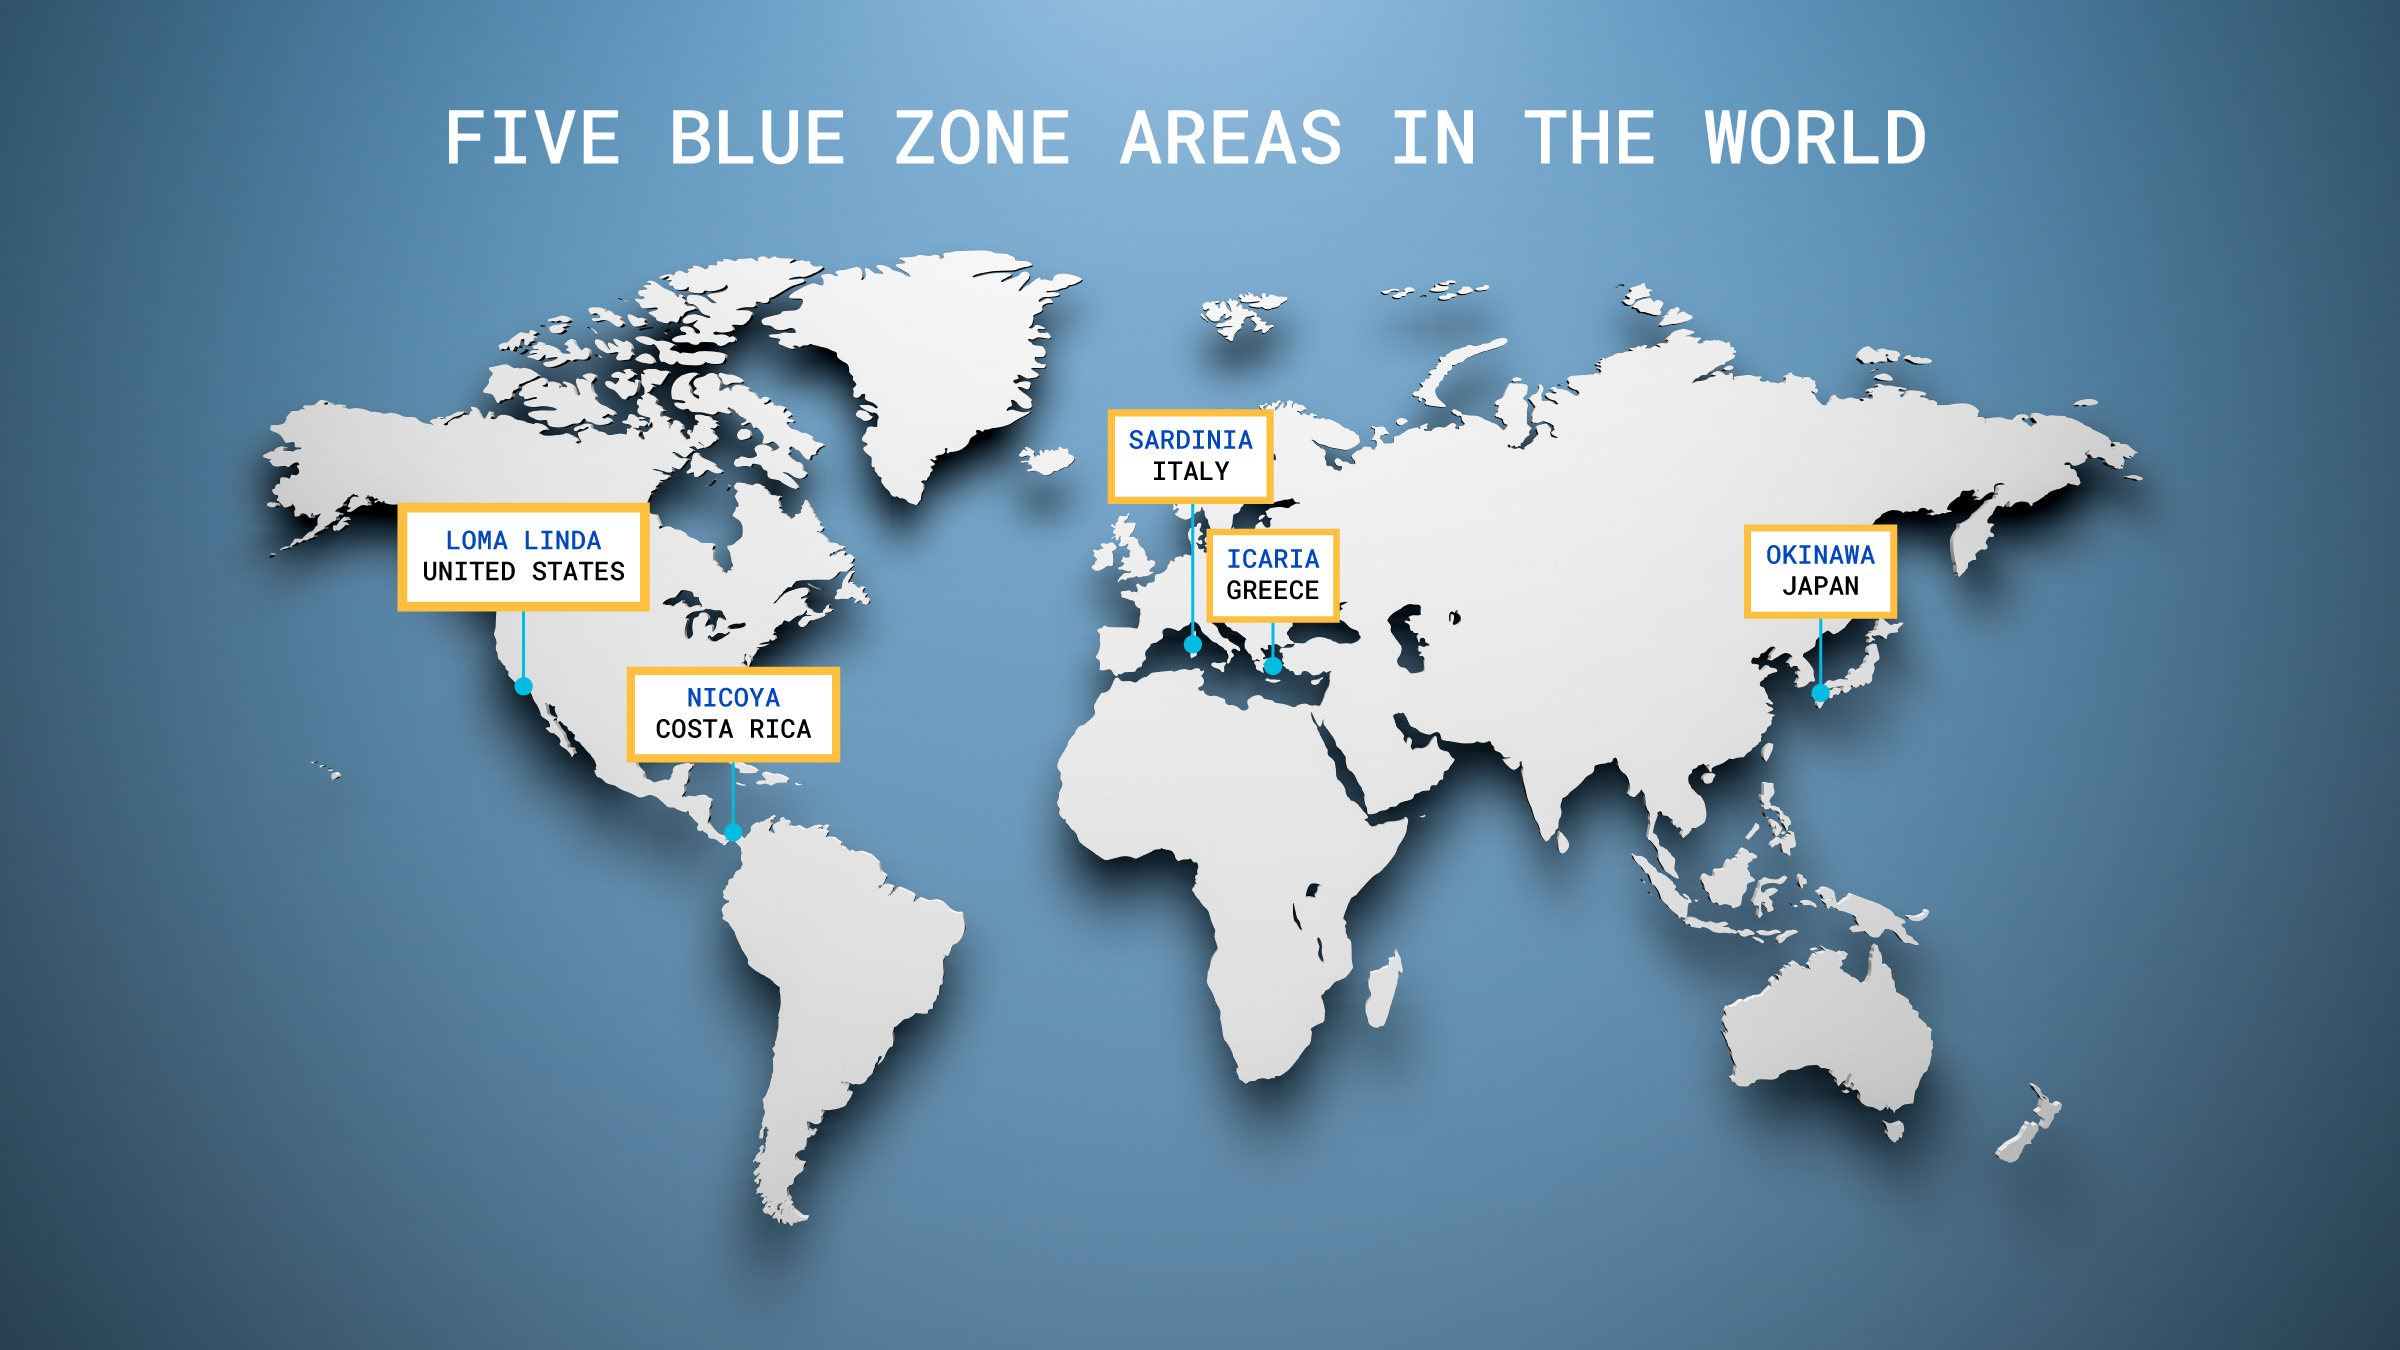 The Blue Zones - image